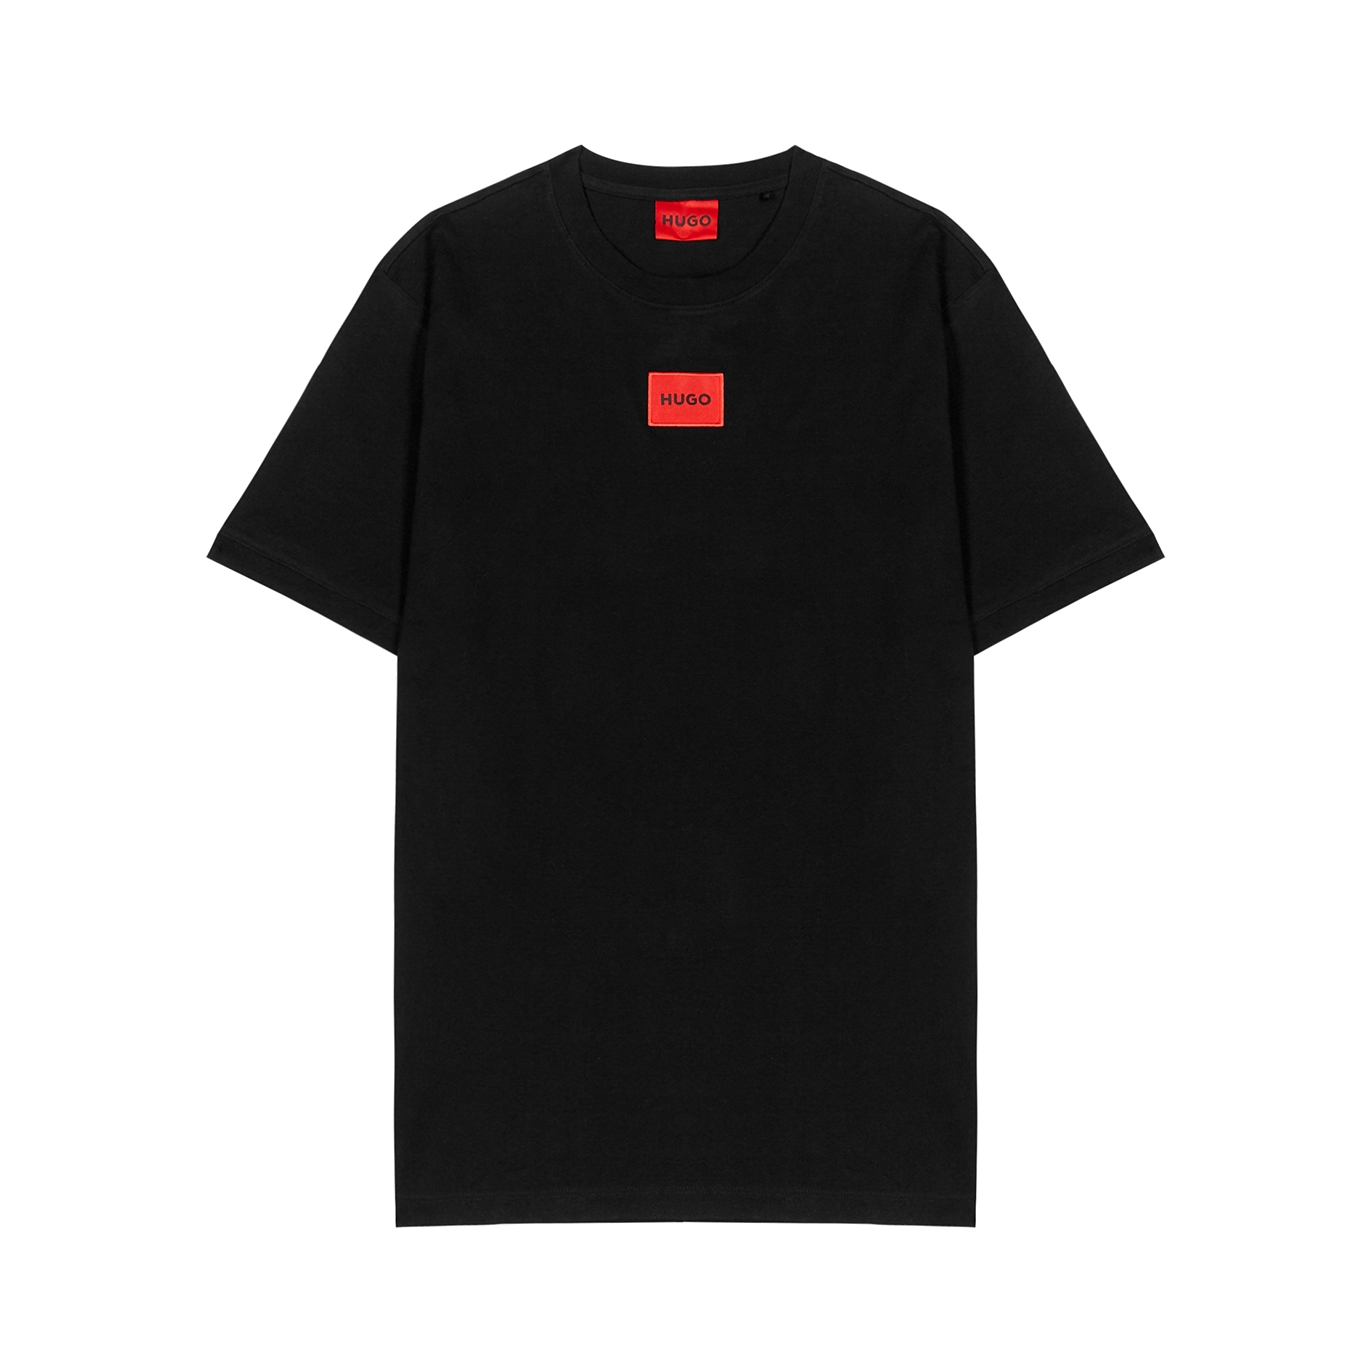 Hugo Black Logo Cotton T-shirt - XL